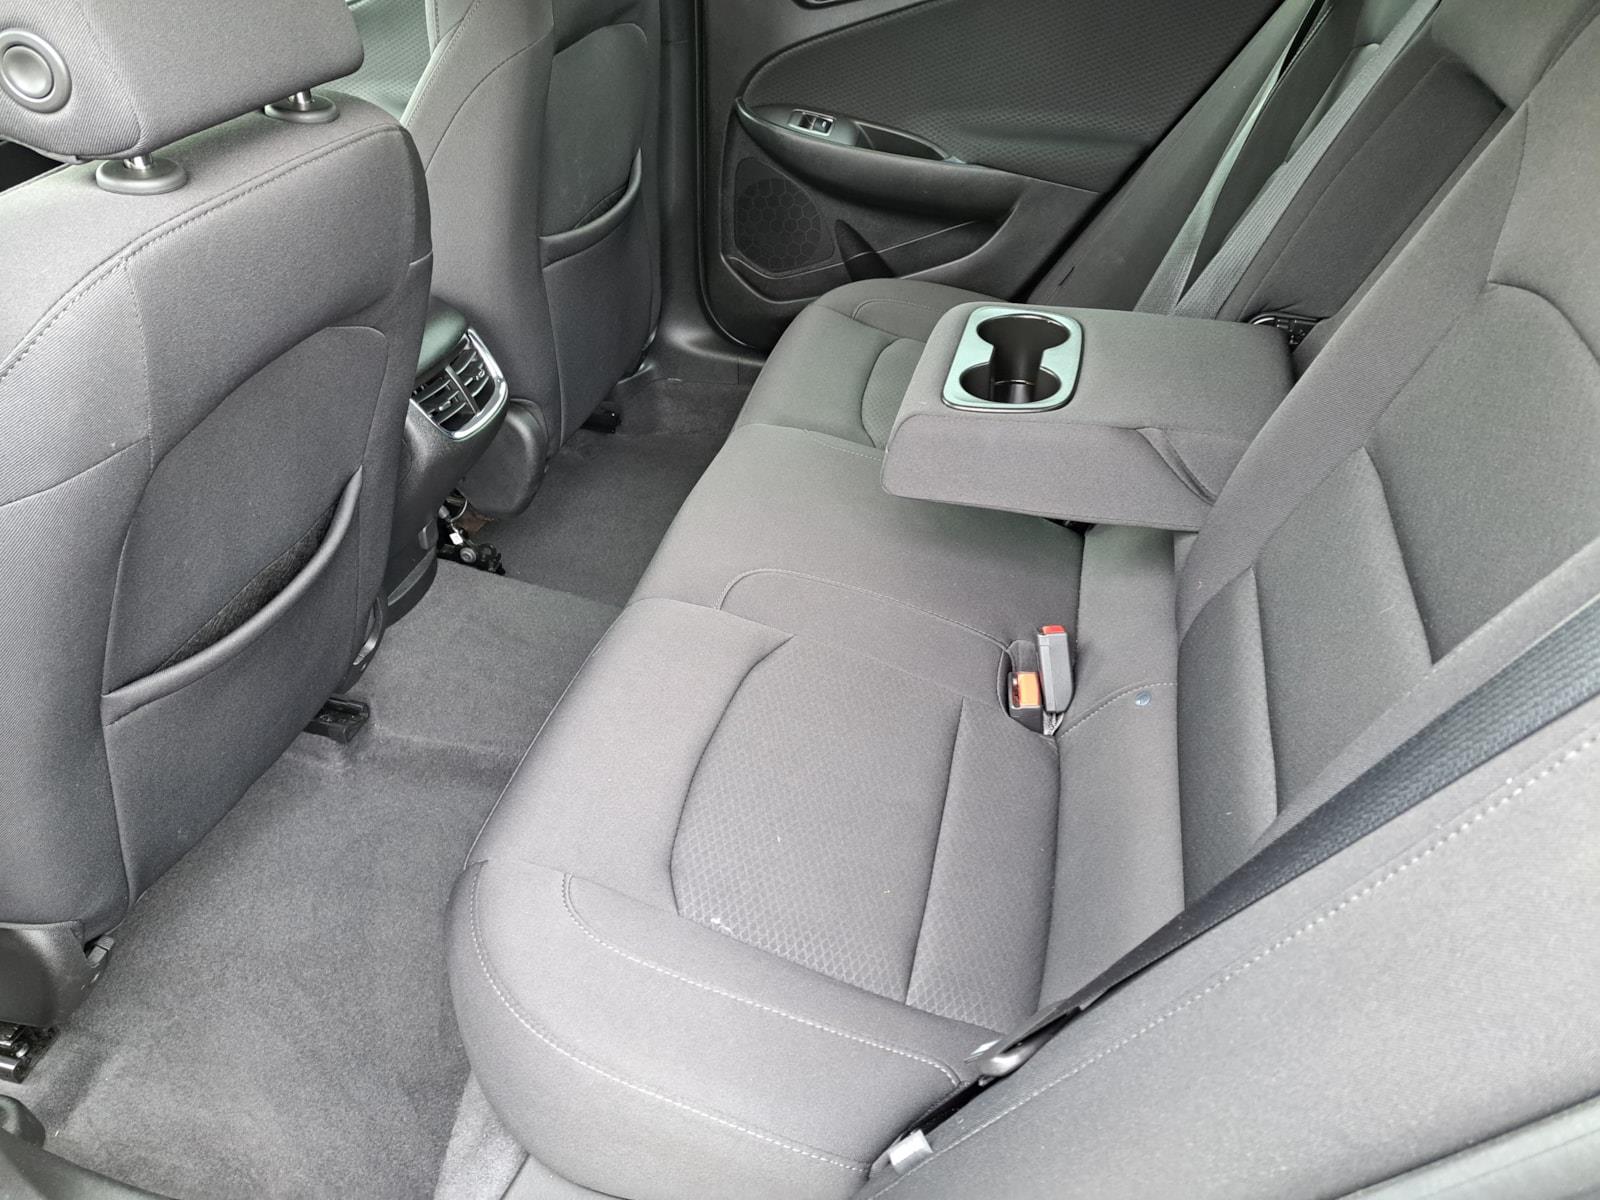 2019 Chevrolet Malibu LT Sedan 4 Dr. Front Wheel Drive 24